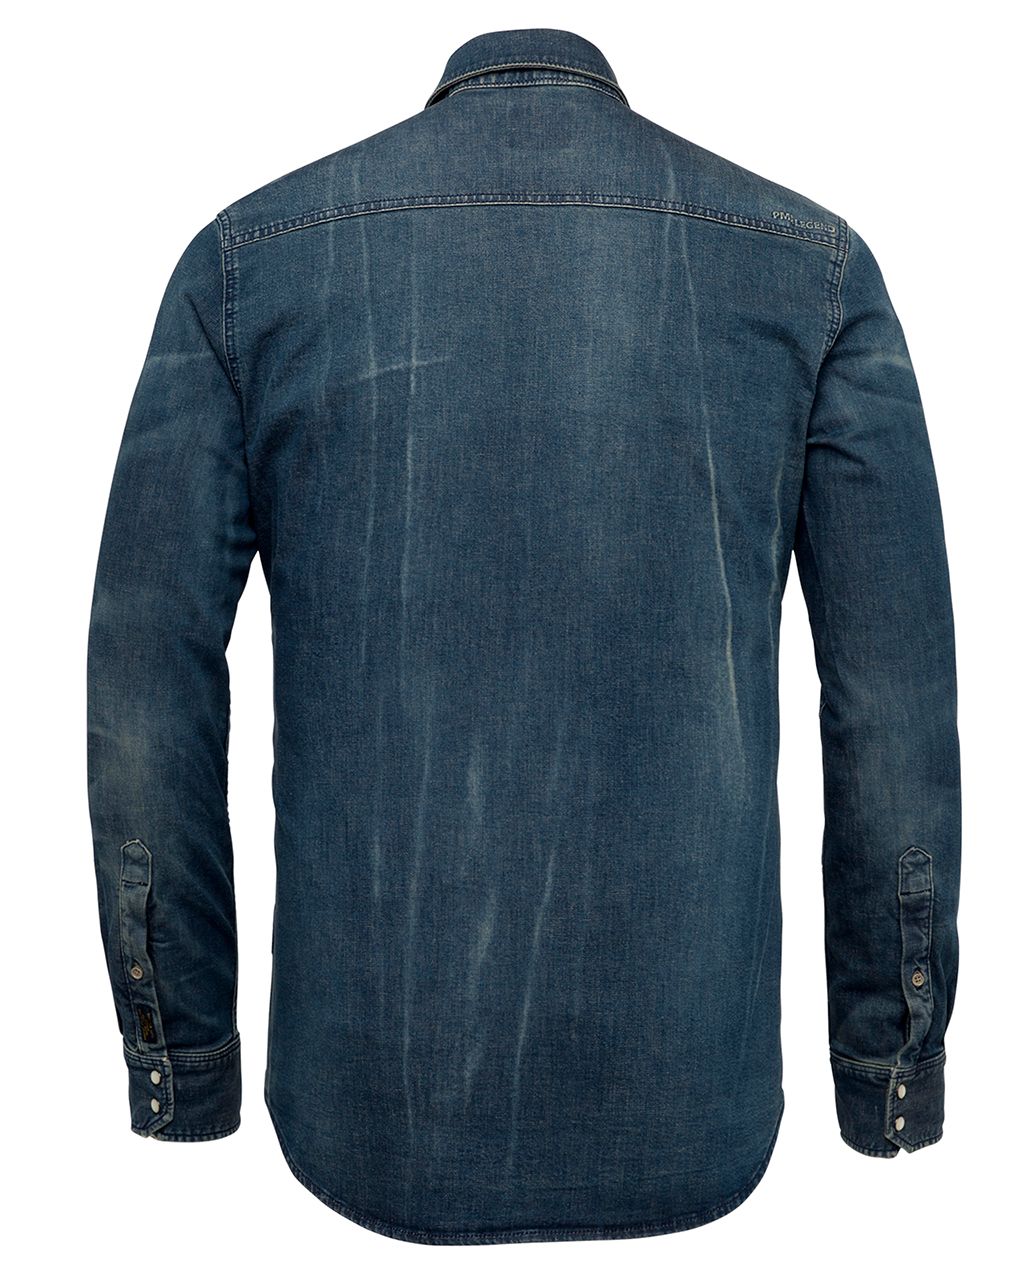 PME Legend Casual Overhemd LM Blauw 076136-001-L